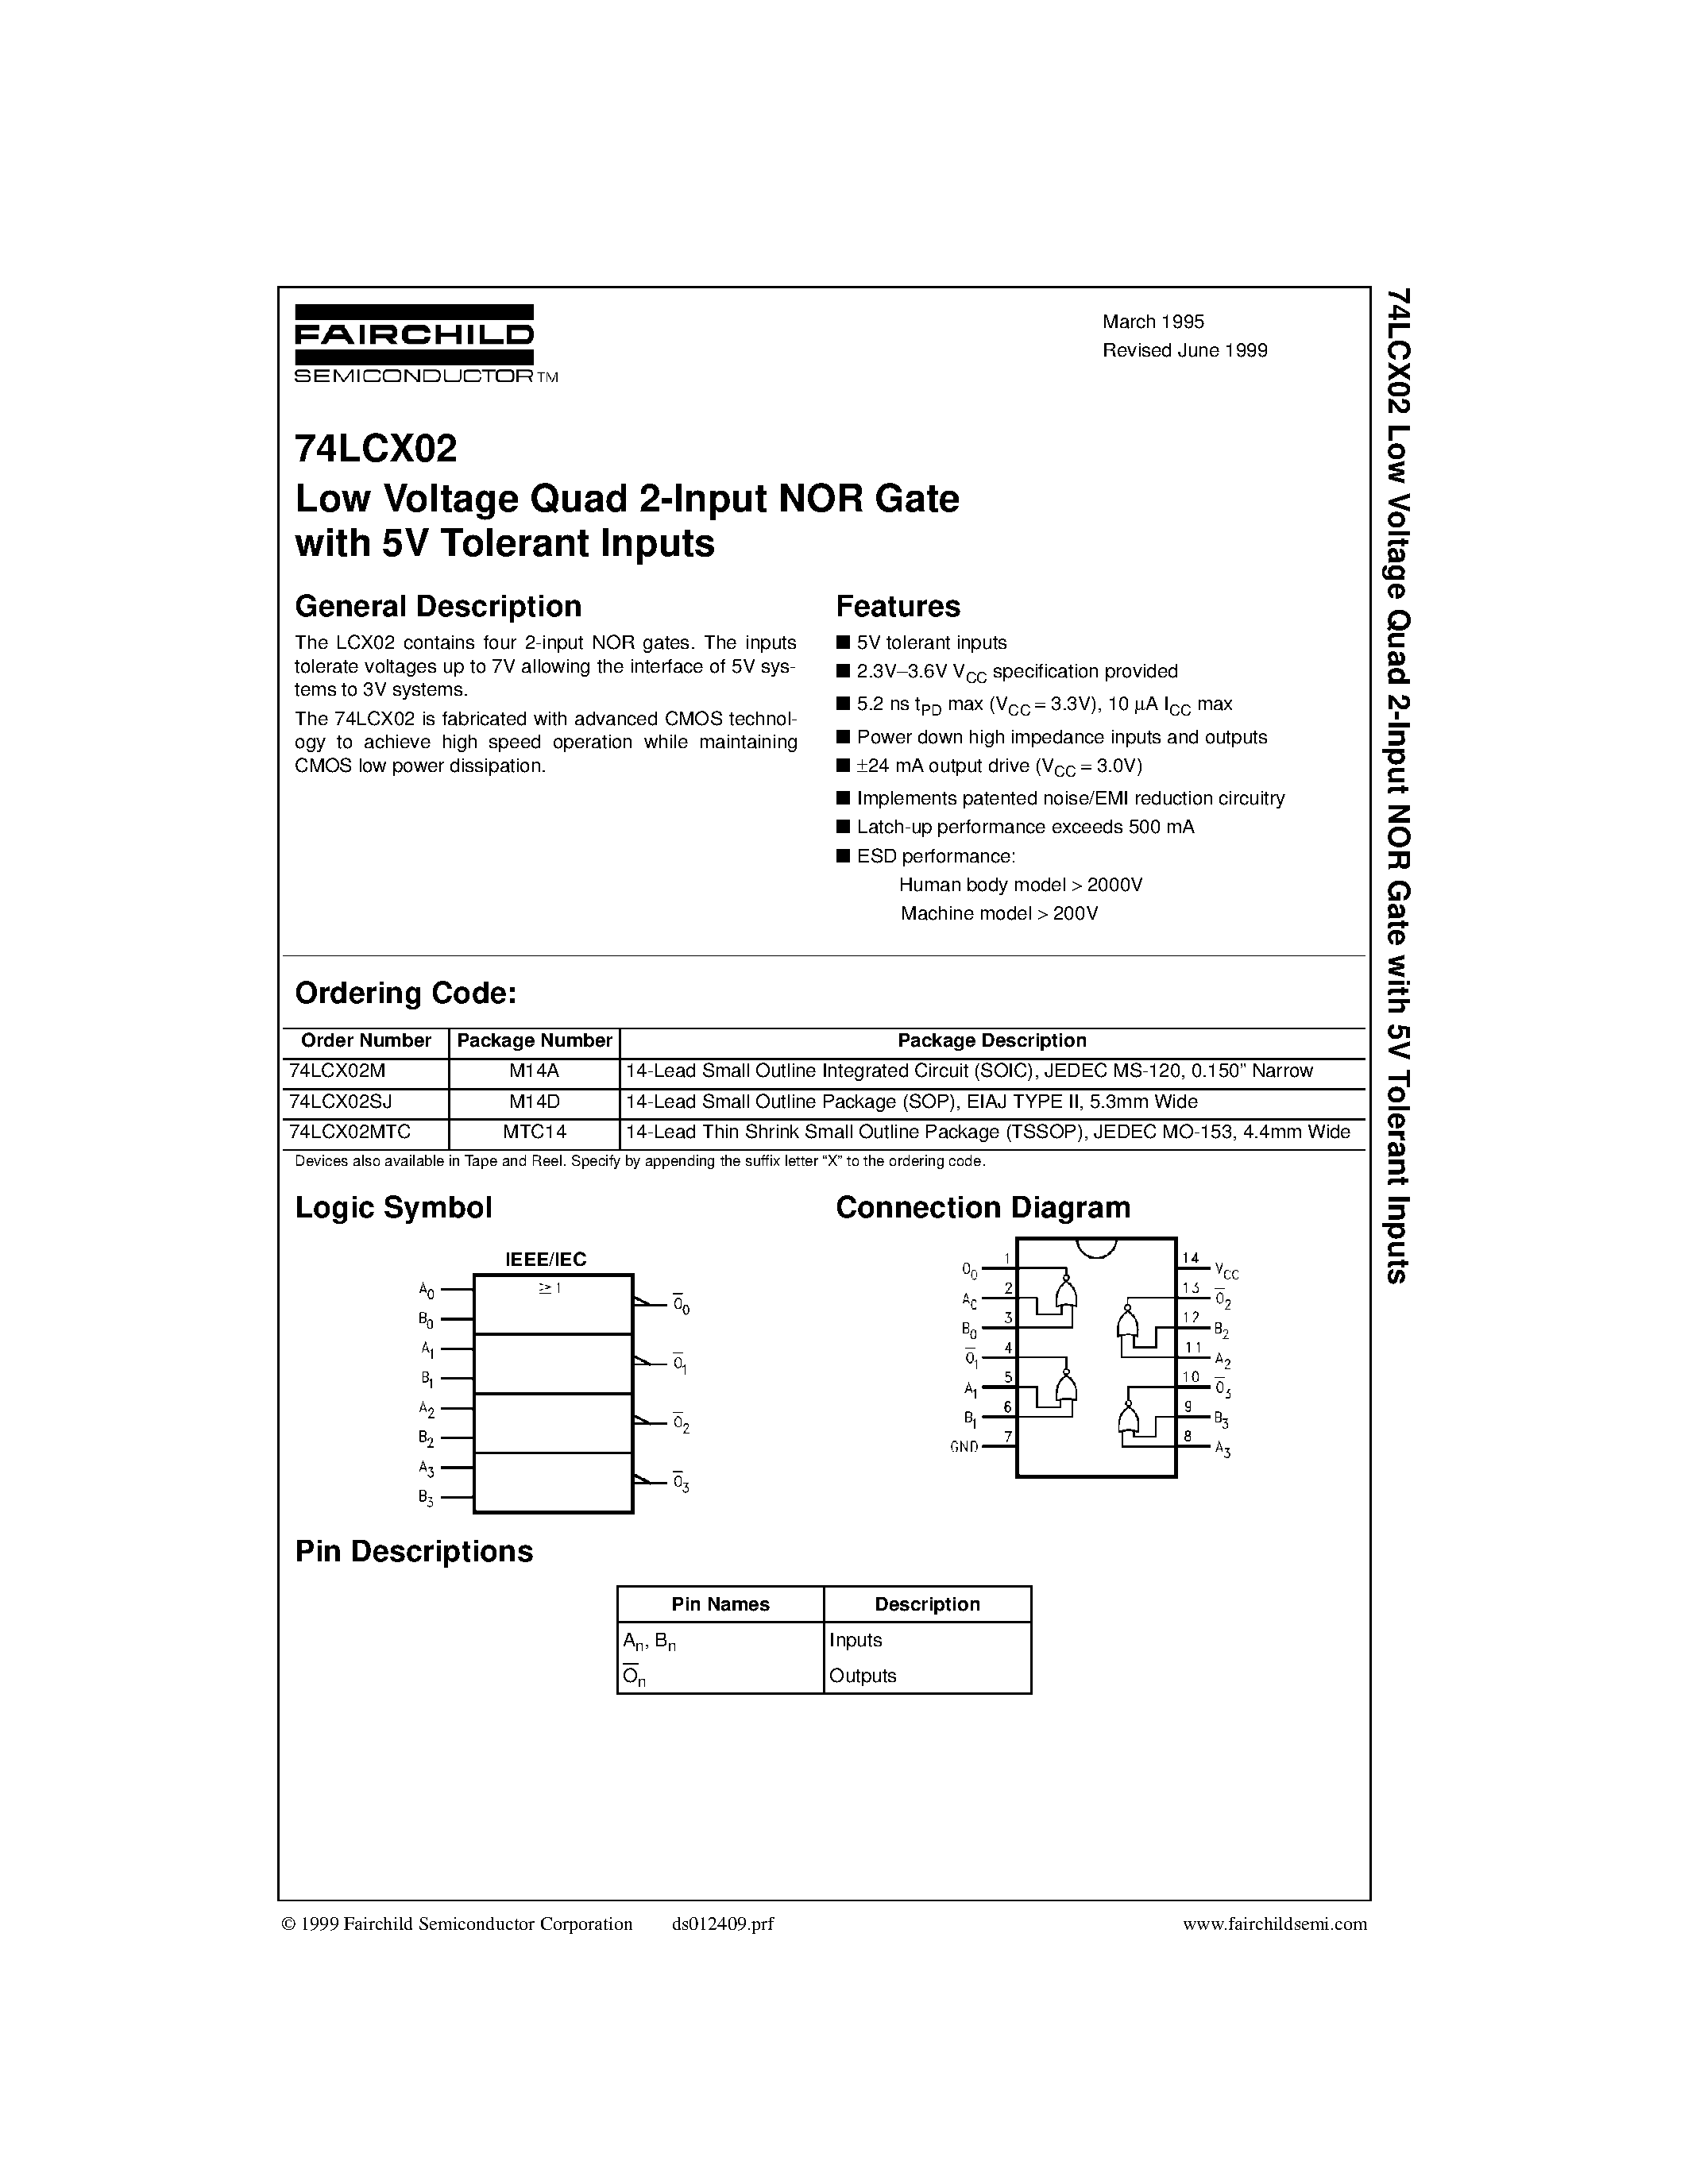 Datasheet 74LCX02SJ - Low Voltage Quad 2-Input NOR Gate page 1